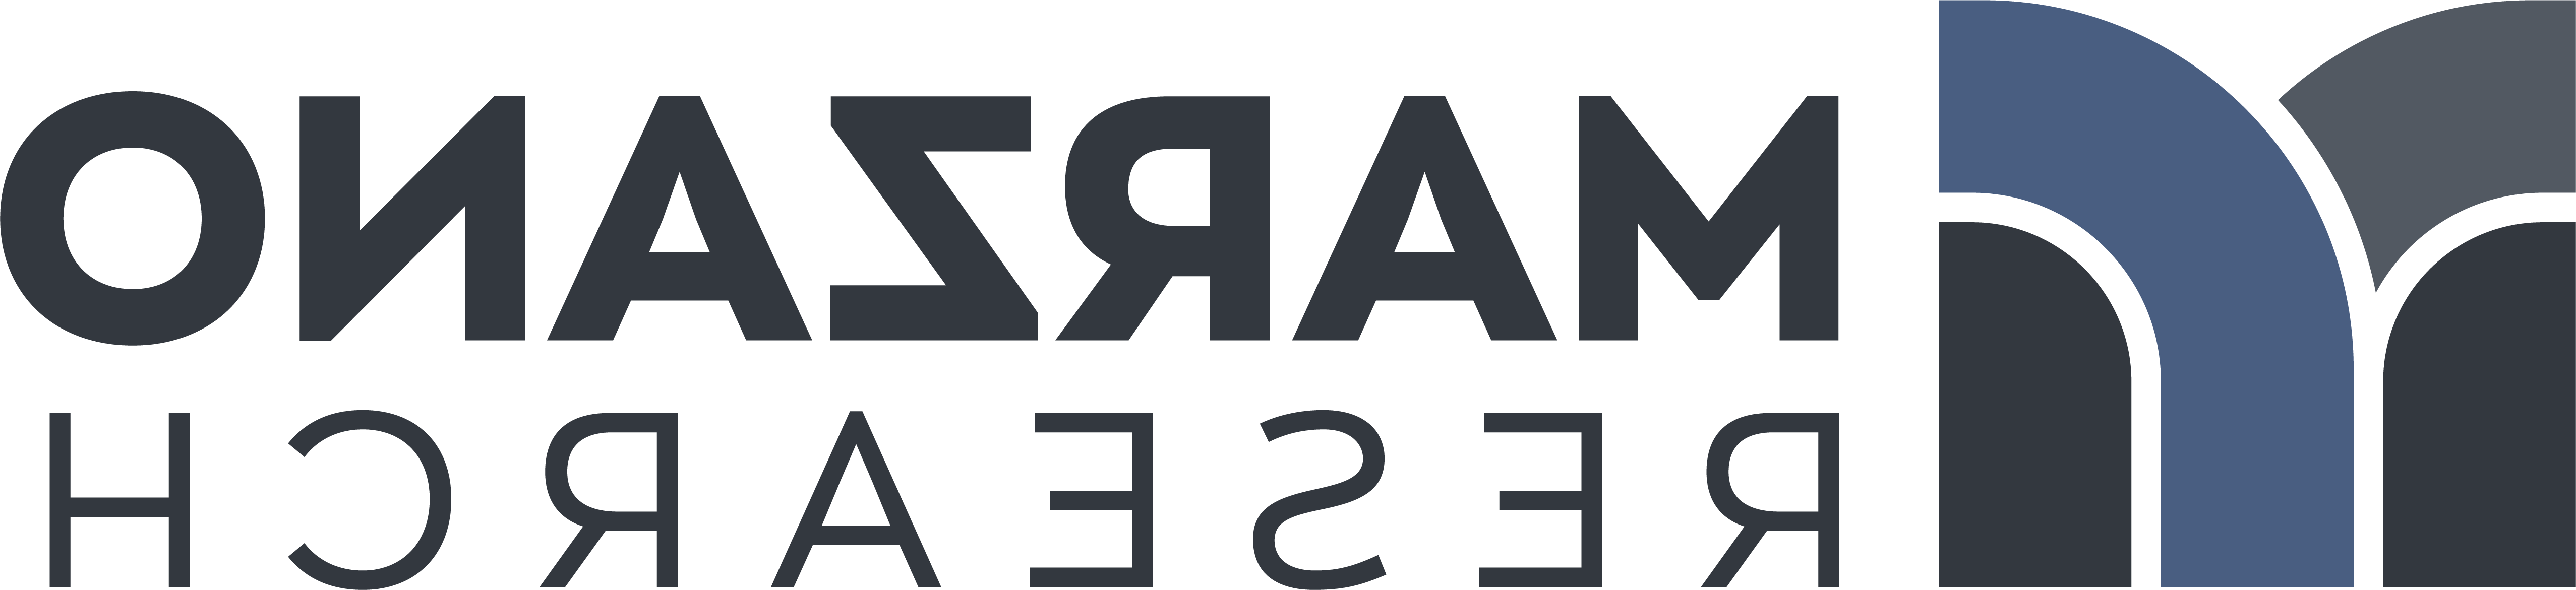 Marzano Research logo